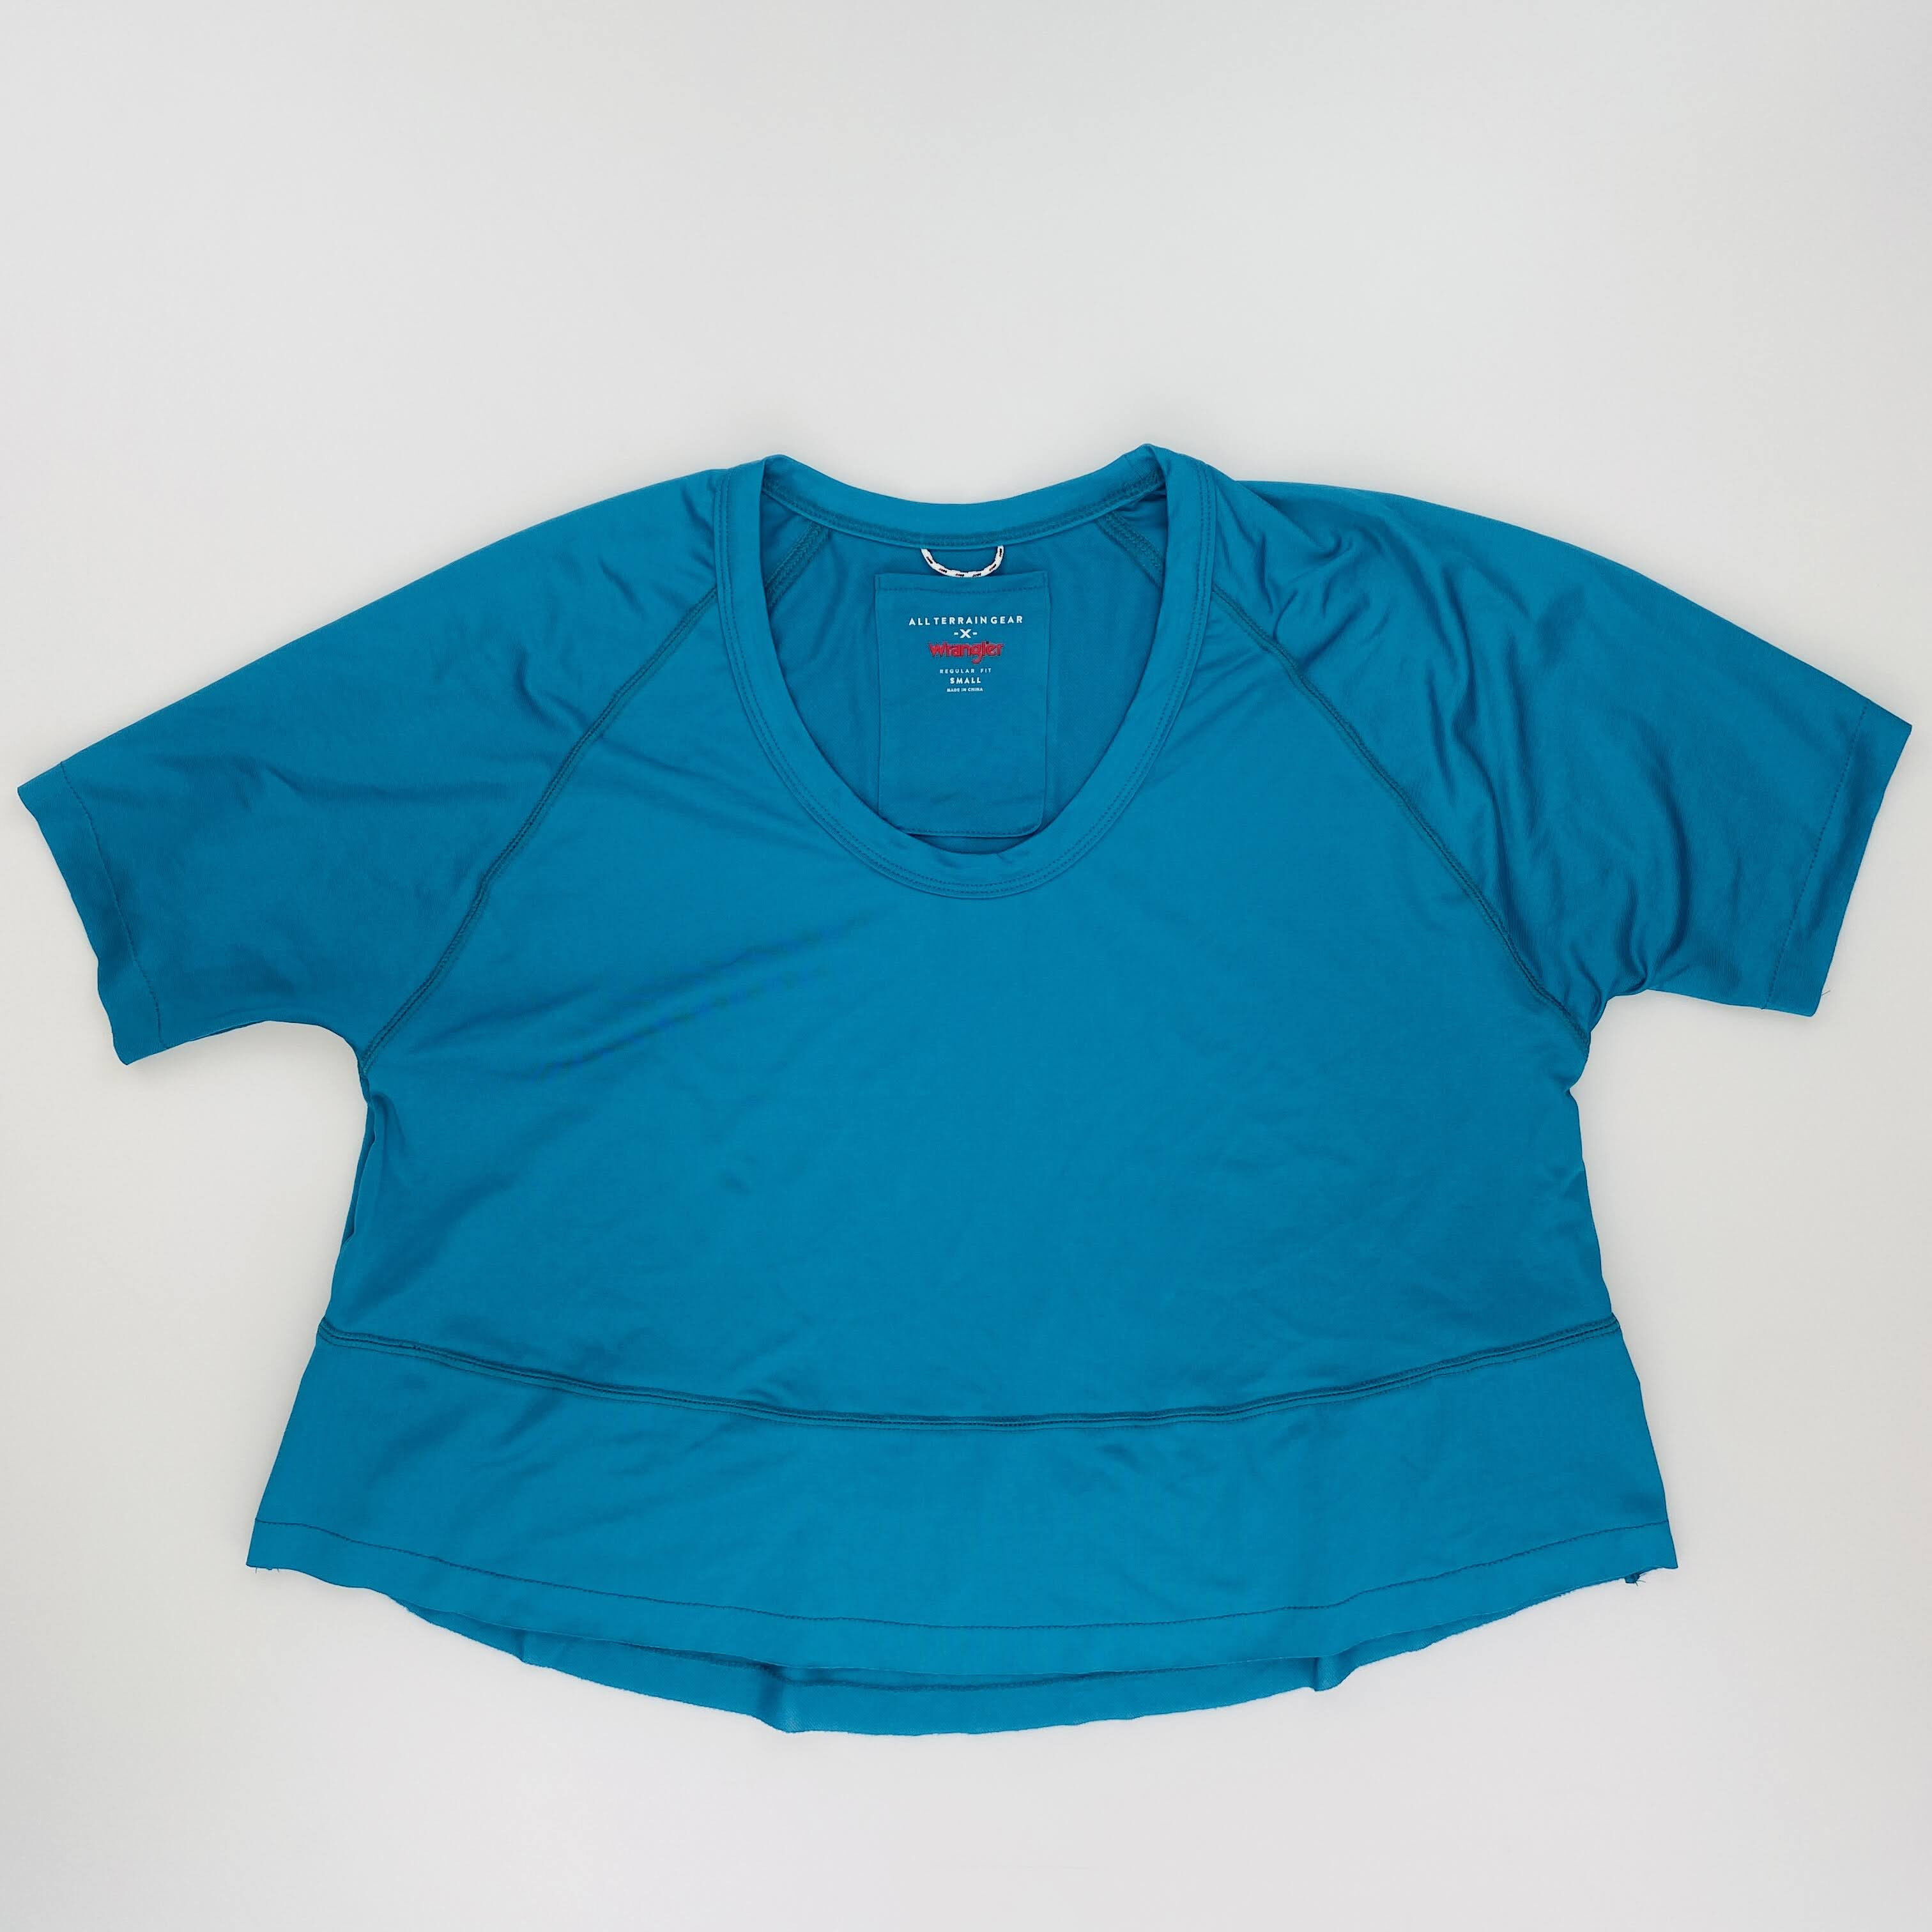 Wrangler Cropped Tee - T-shirt di seconda mano - Donna - Blu - S | Hardloop